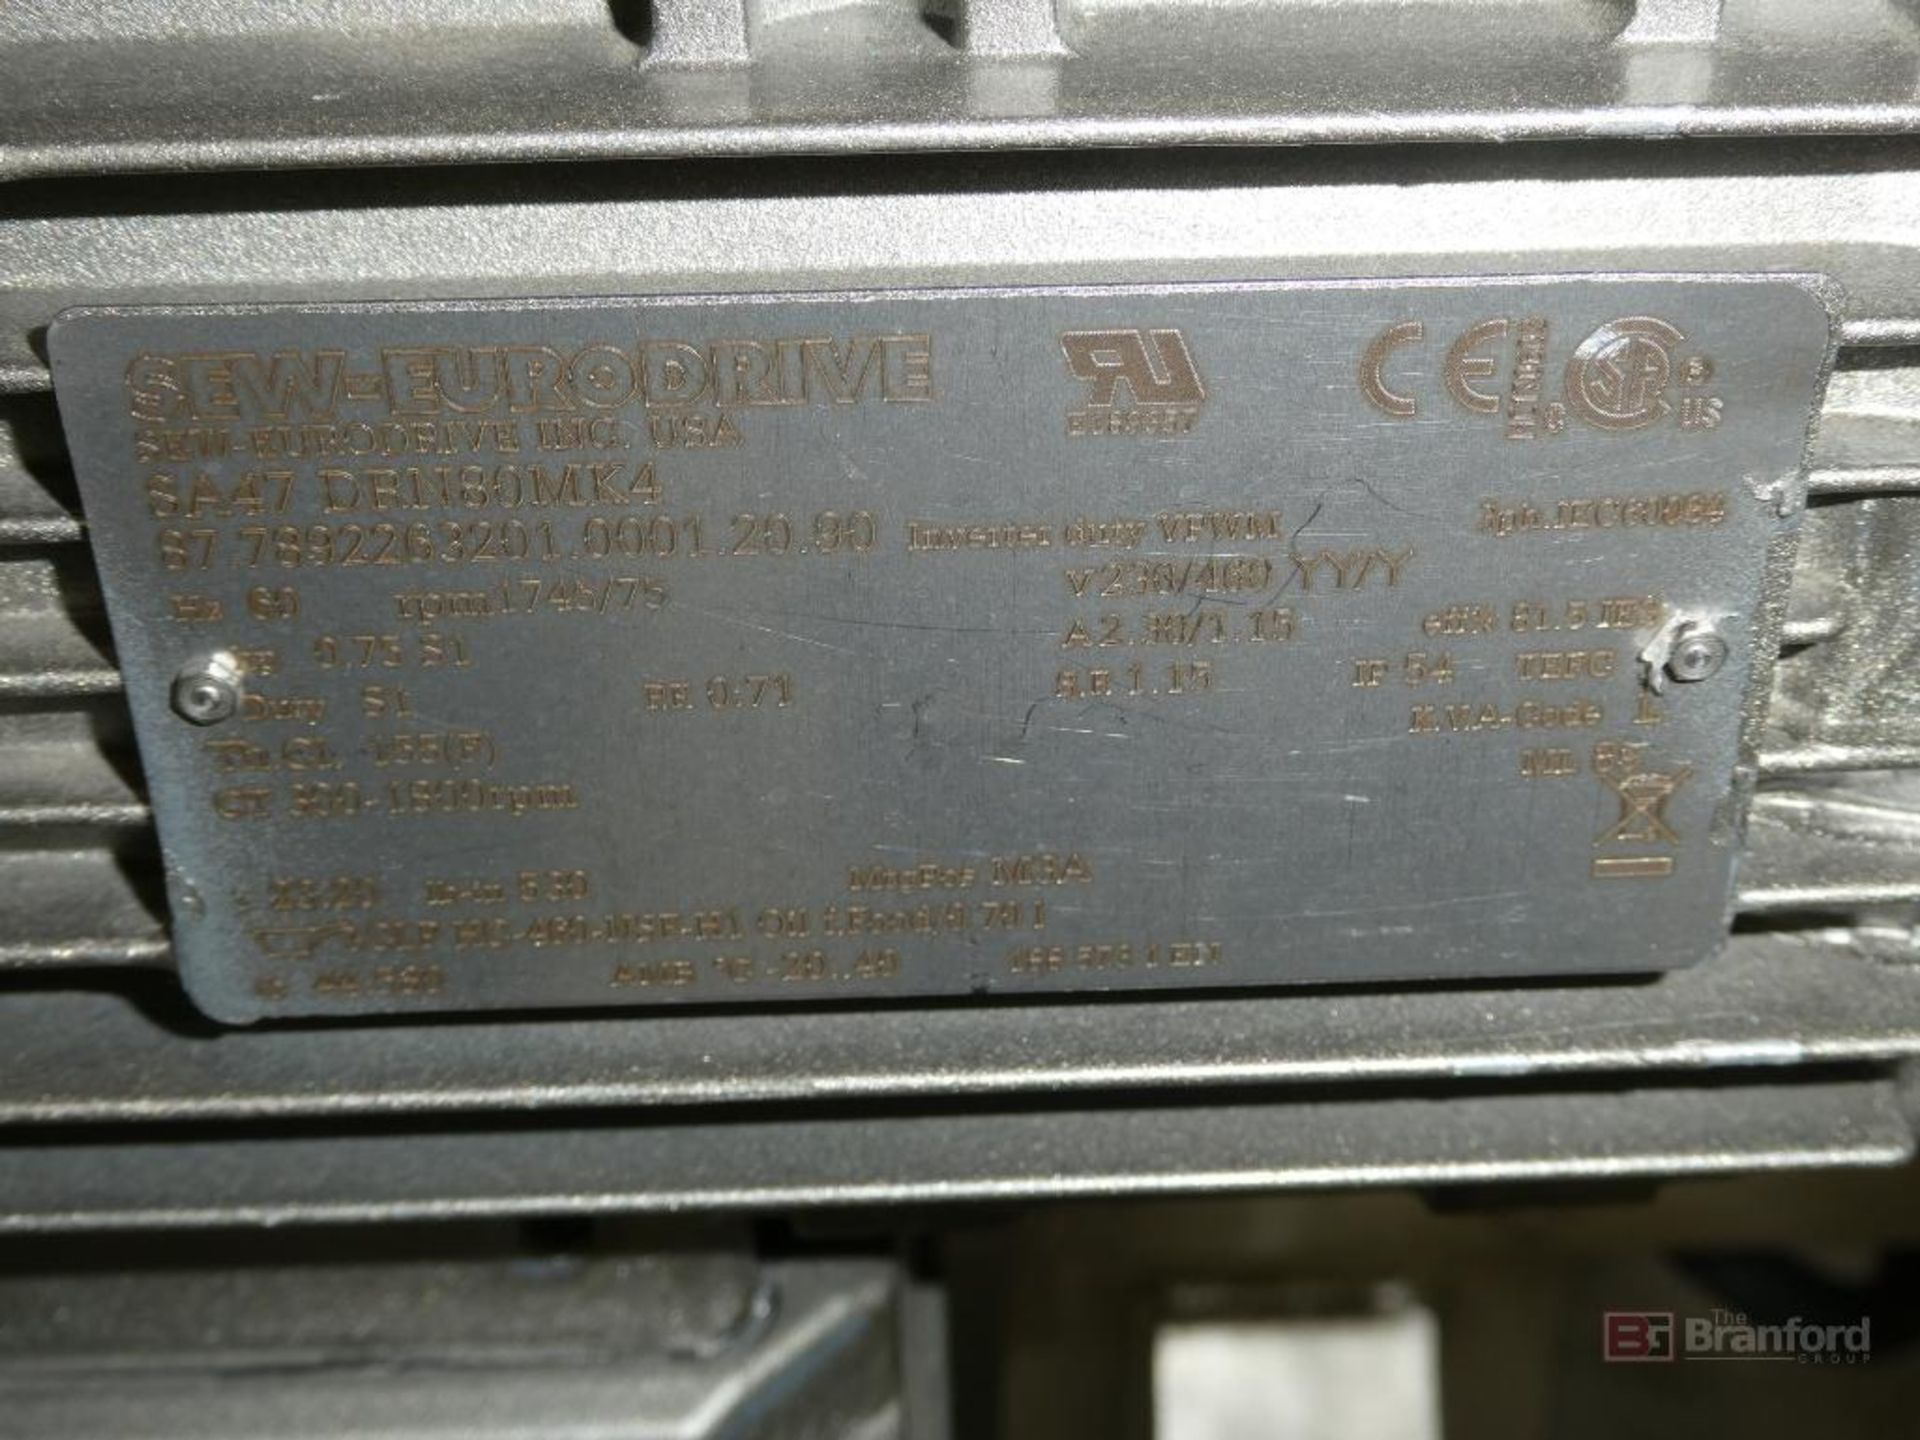 Garvey Model BF48, Stainless Steel Accumulation/Conveyor Table - Image 5 of 6